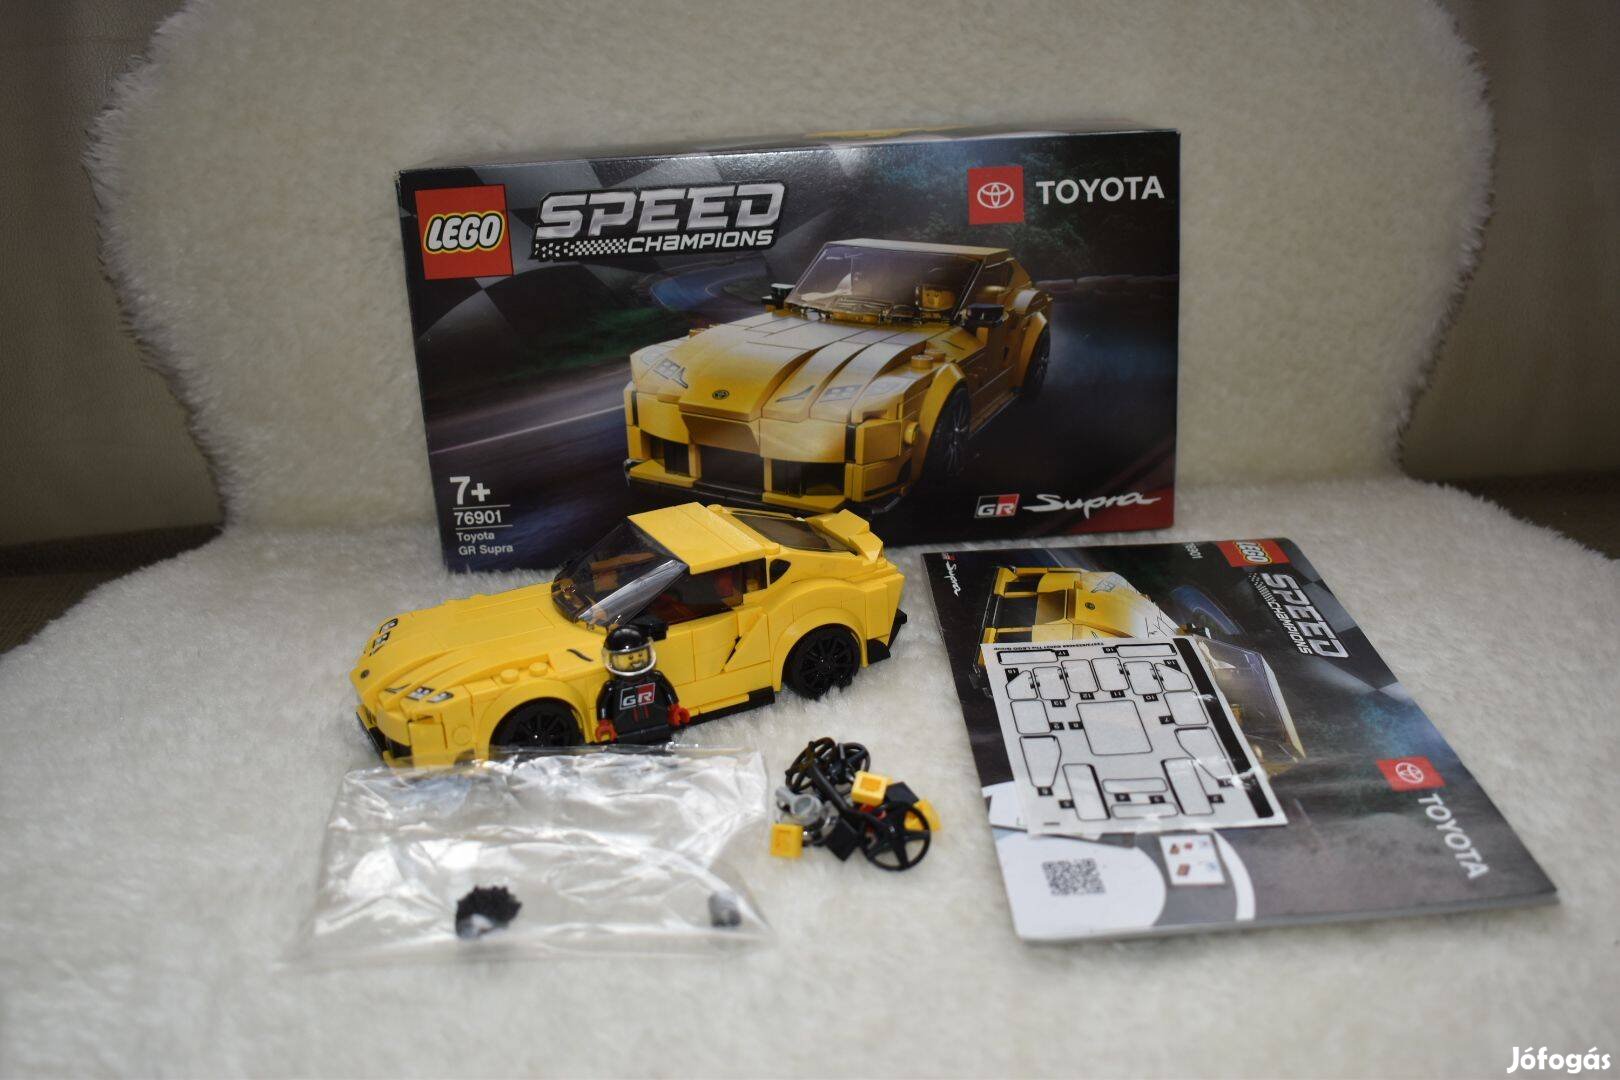 Lego Speed Champions 76901 (Toyota Gr Supra)